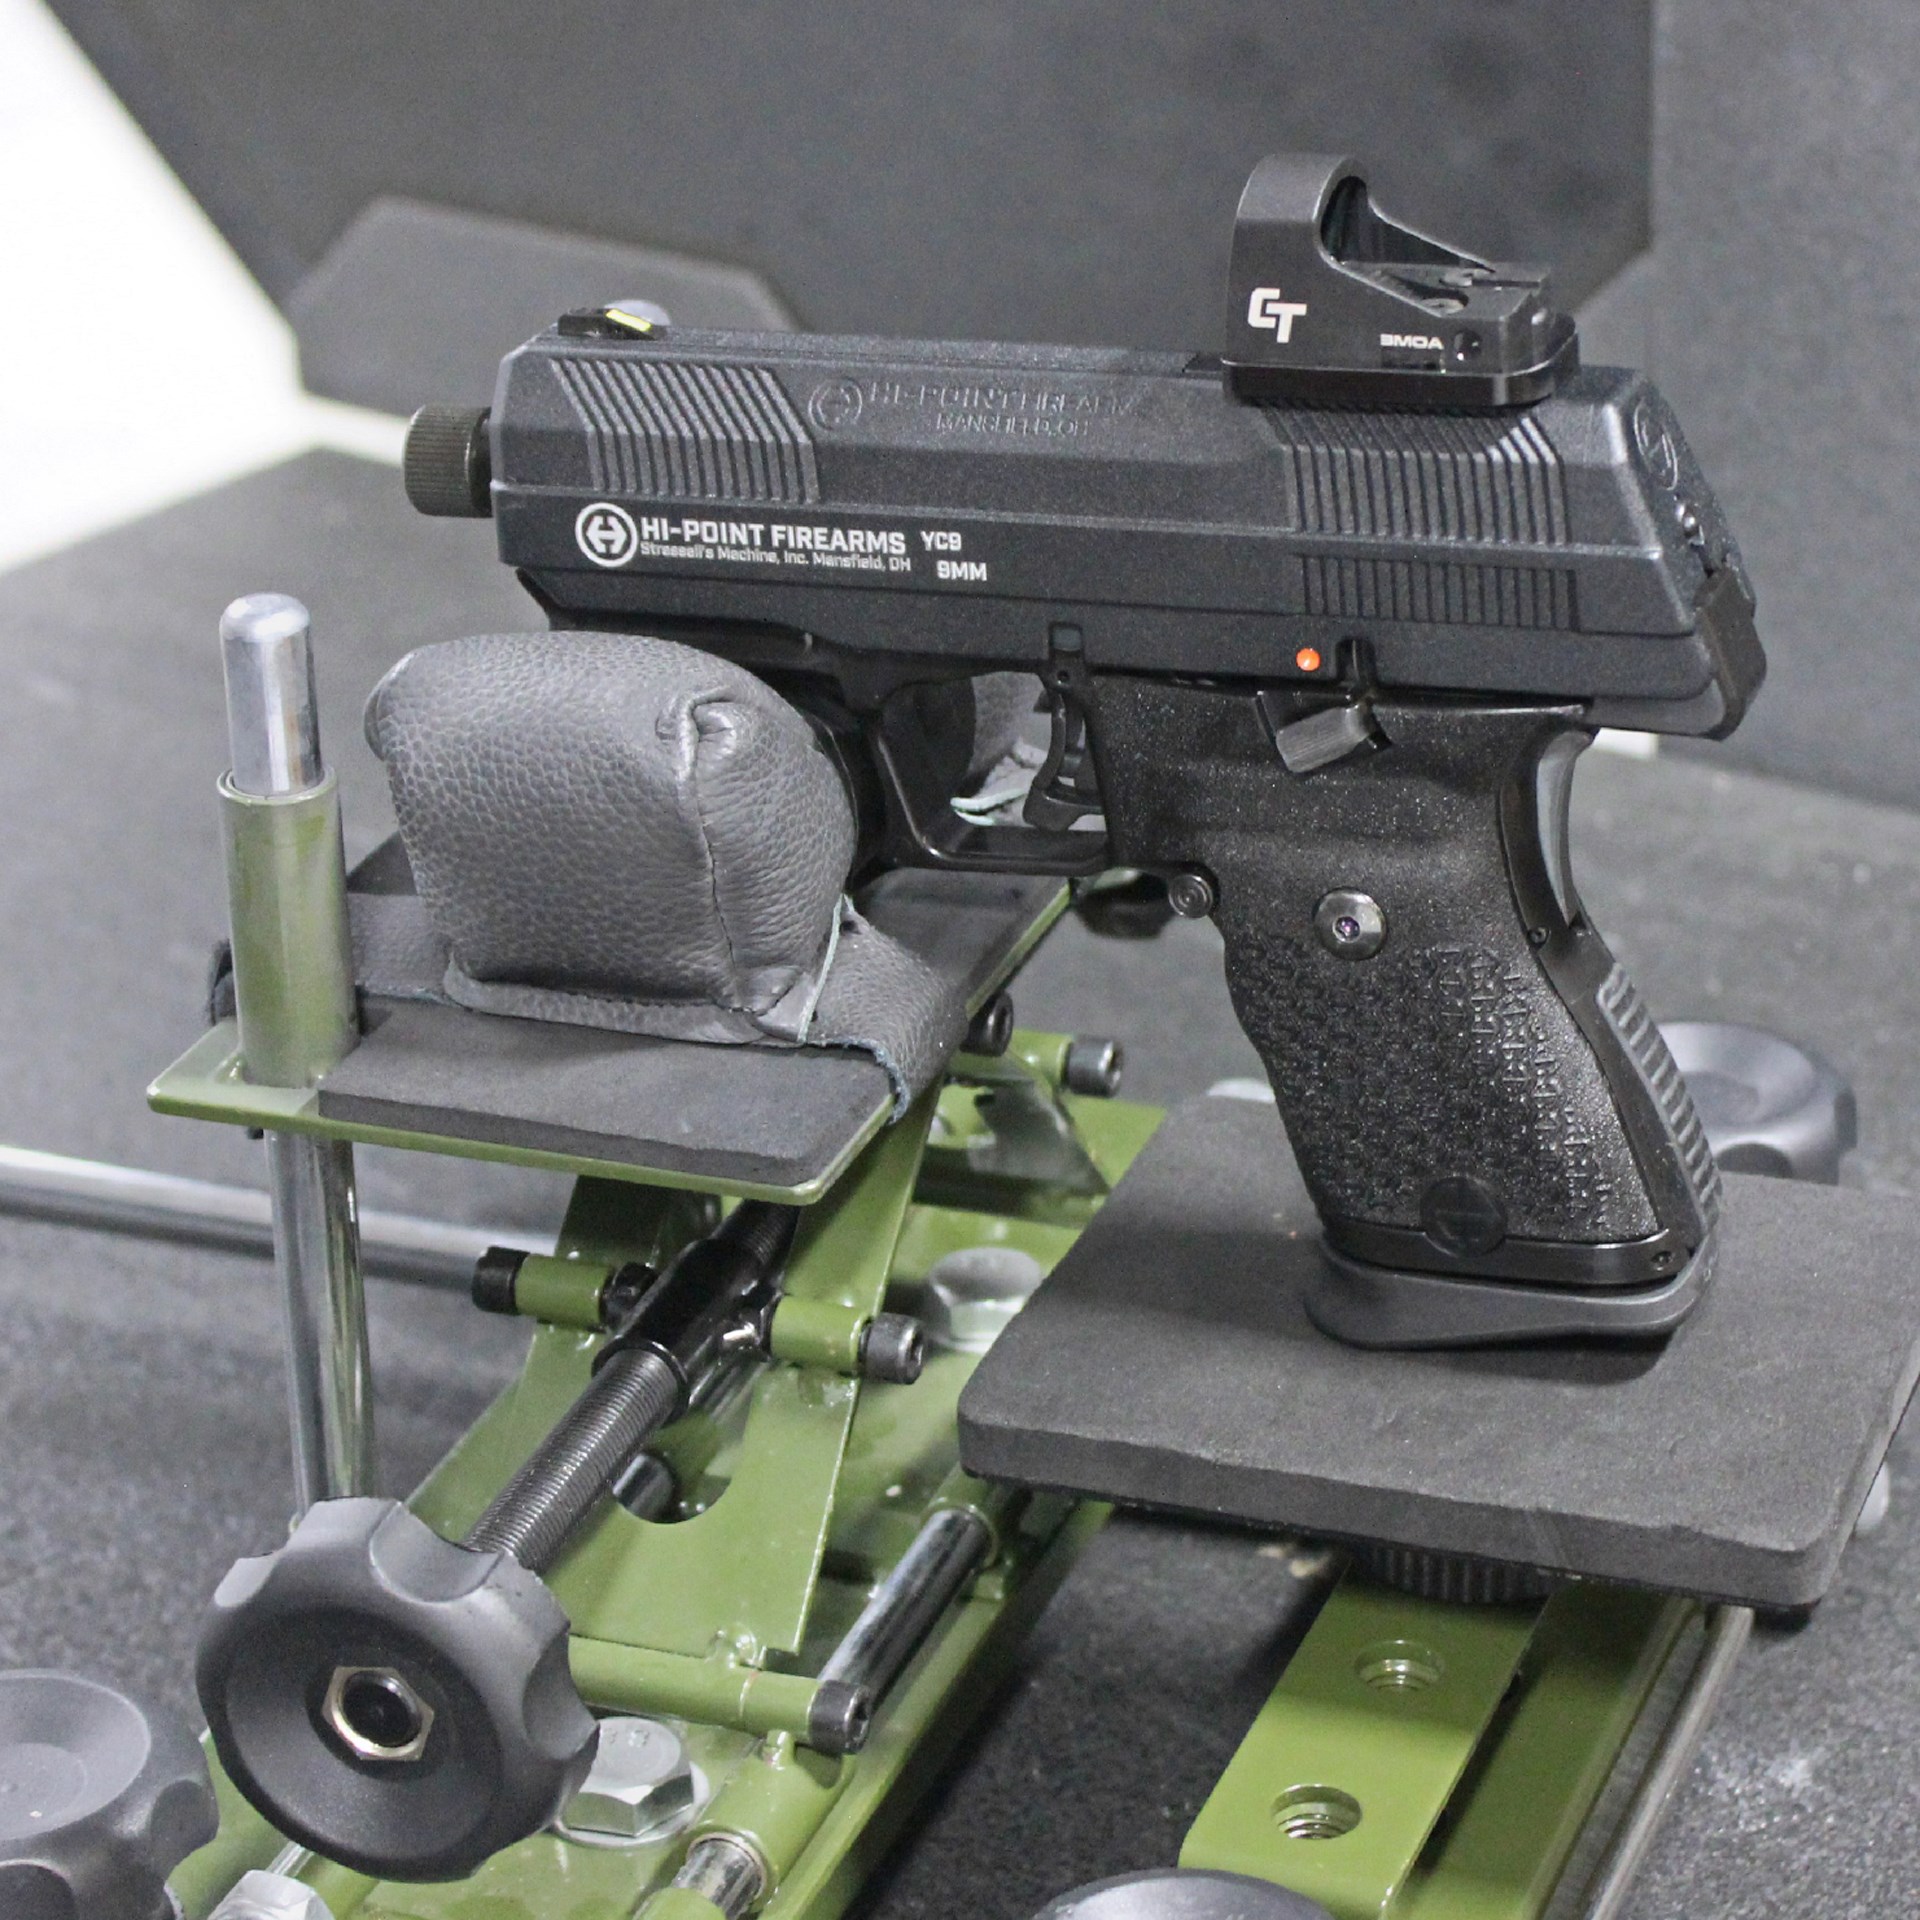 Hi-Point Firearms YC9RD handgun left-side view shown in gun rest at shooting range with Crimson Trace red-dot handgun optic mounted